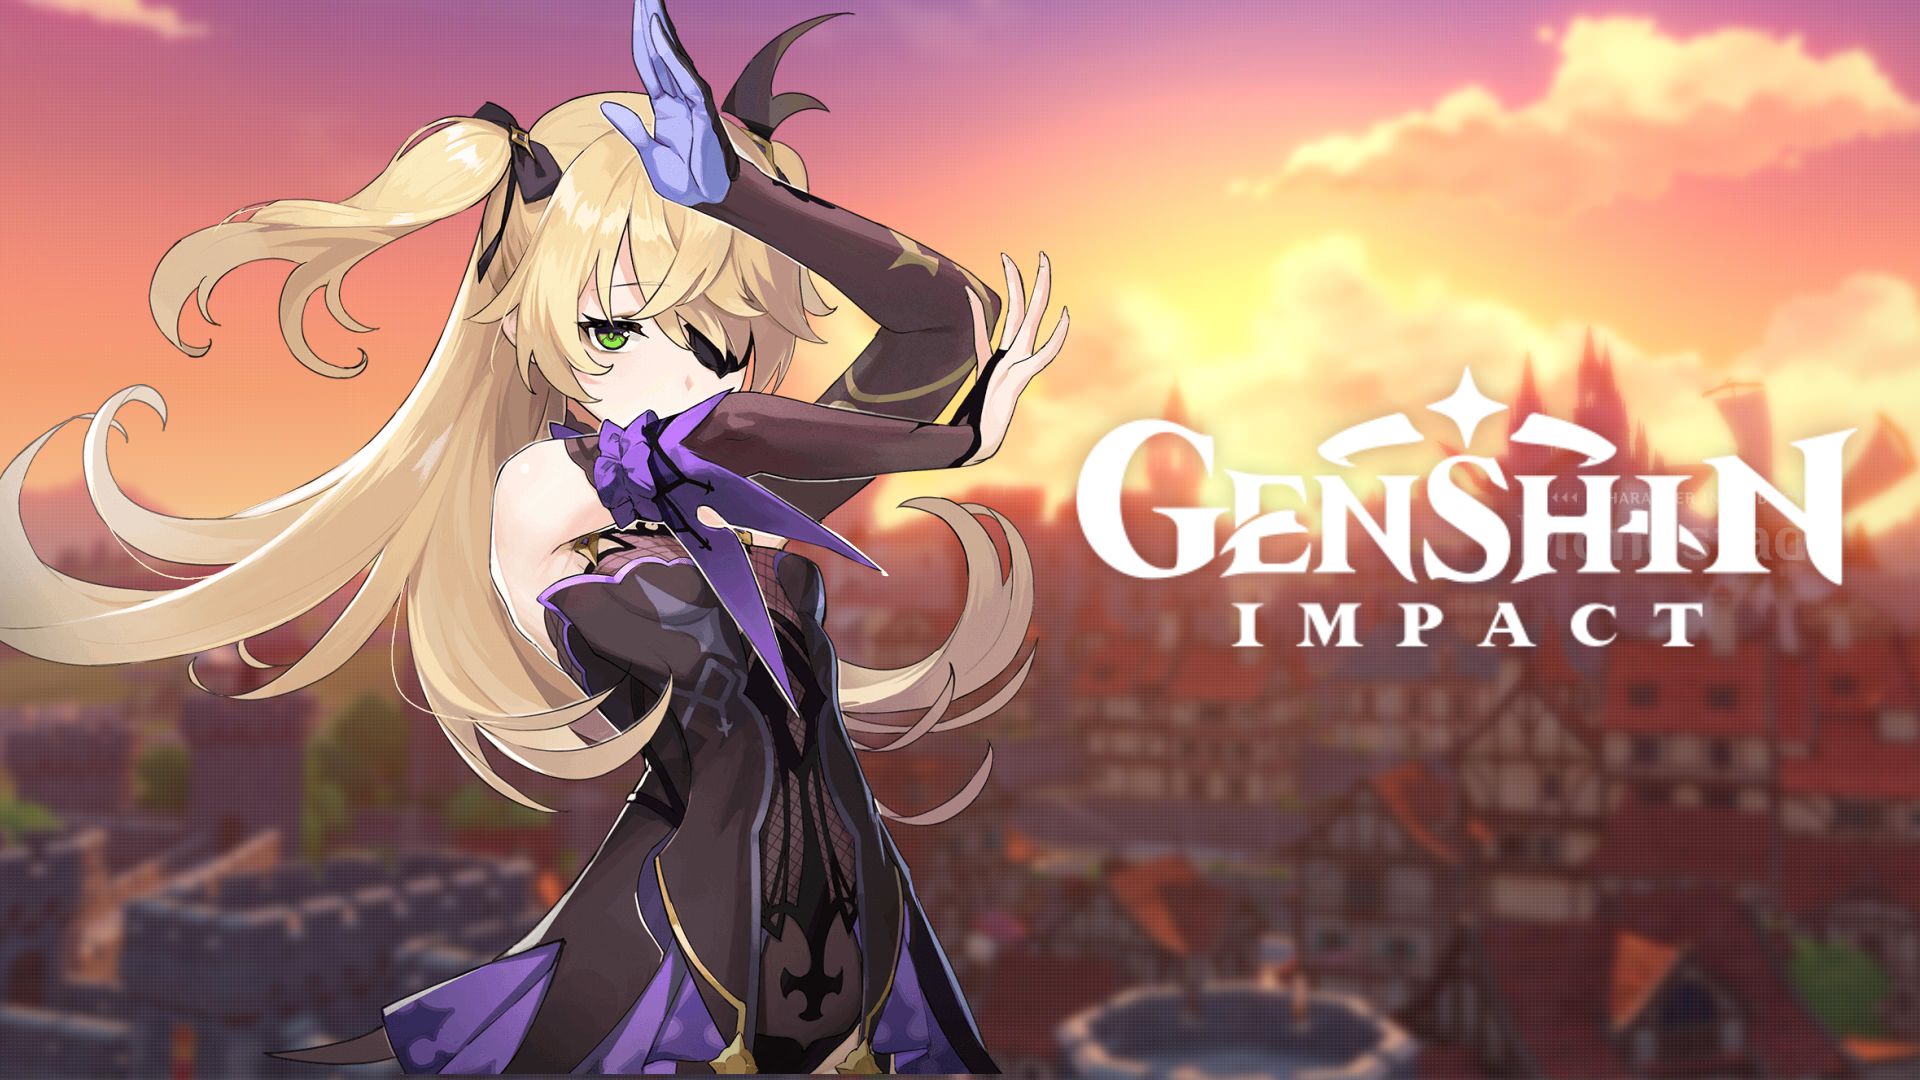 Genshin Impact – Personagem Fischl ganha detalhes